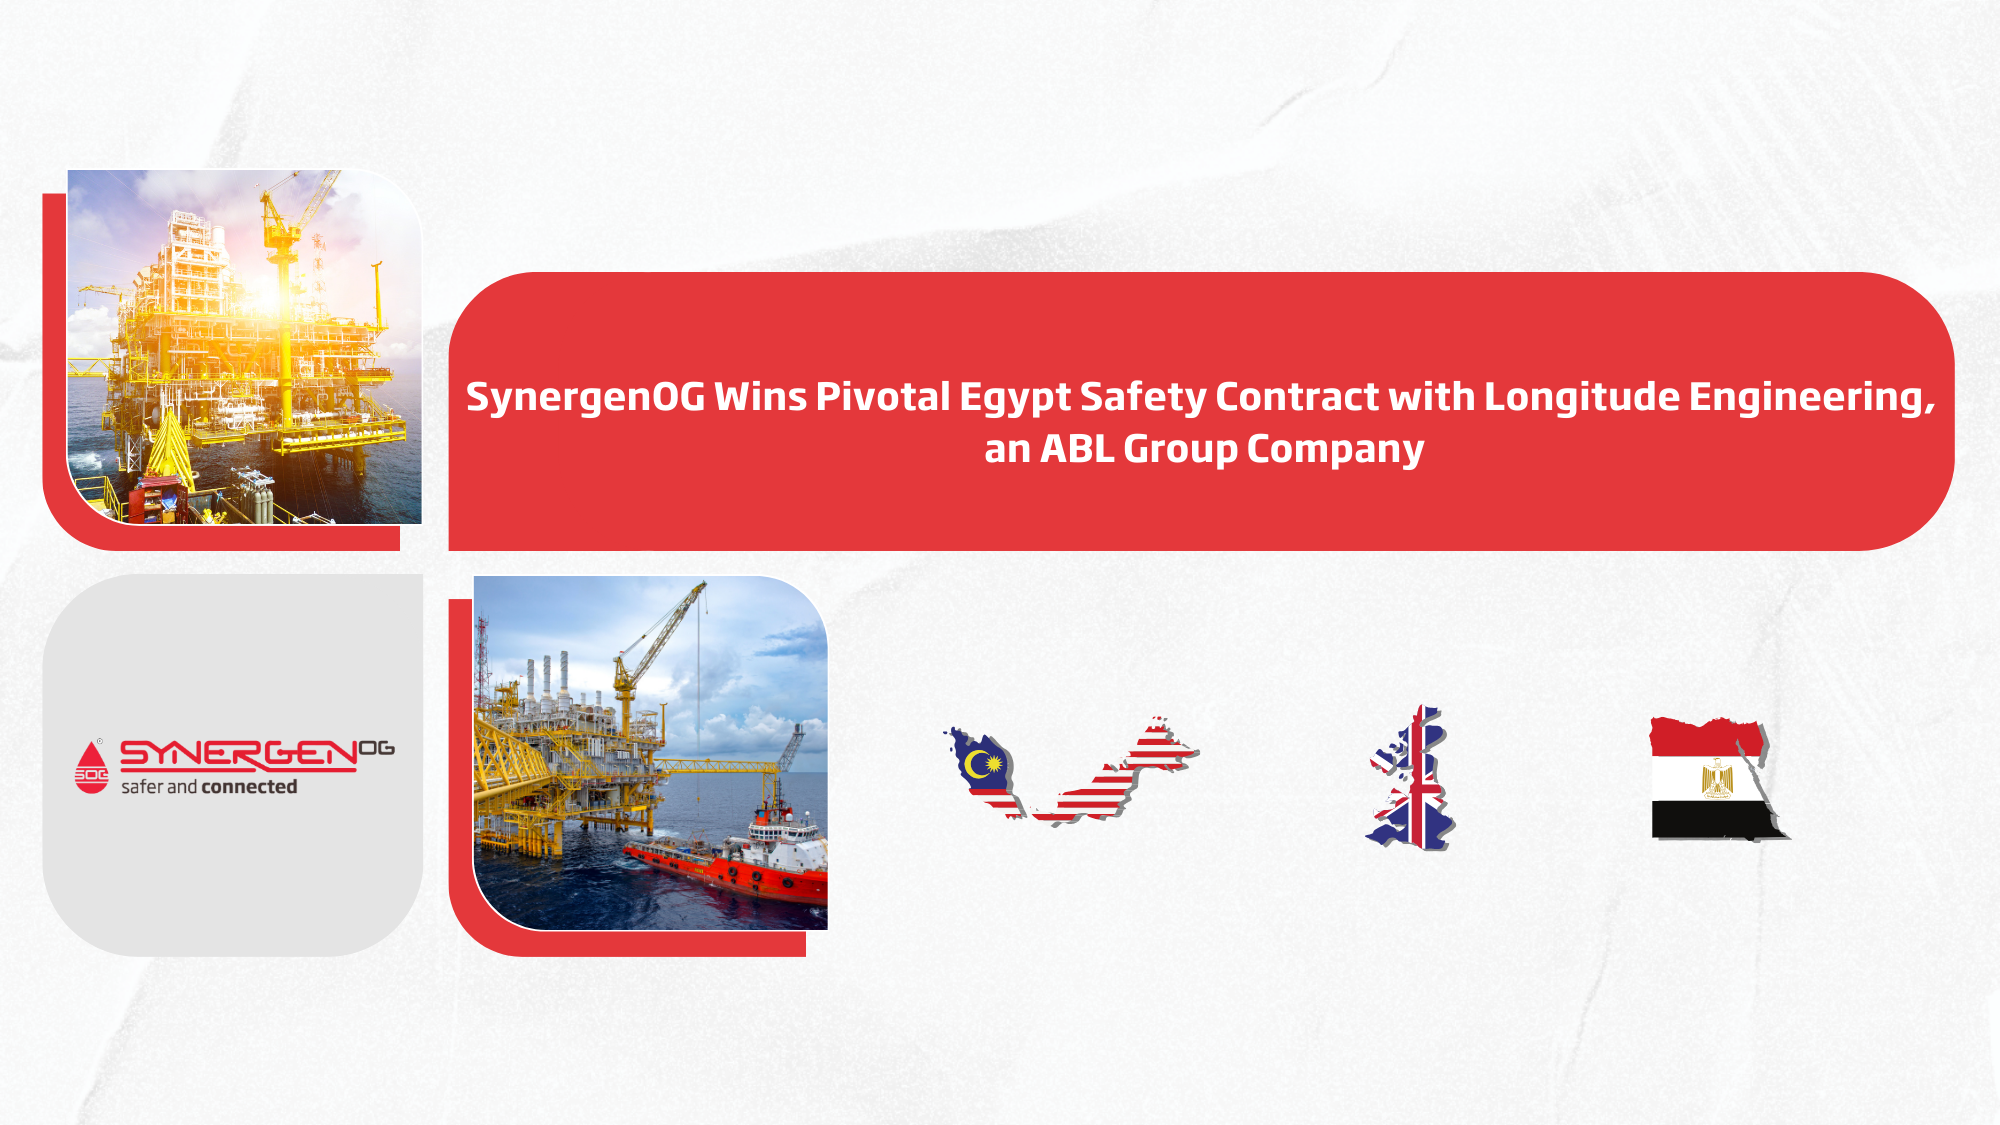 SynergenOG Longitude Engineering Egypt Contract